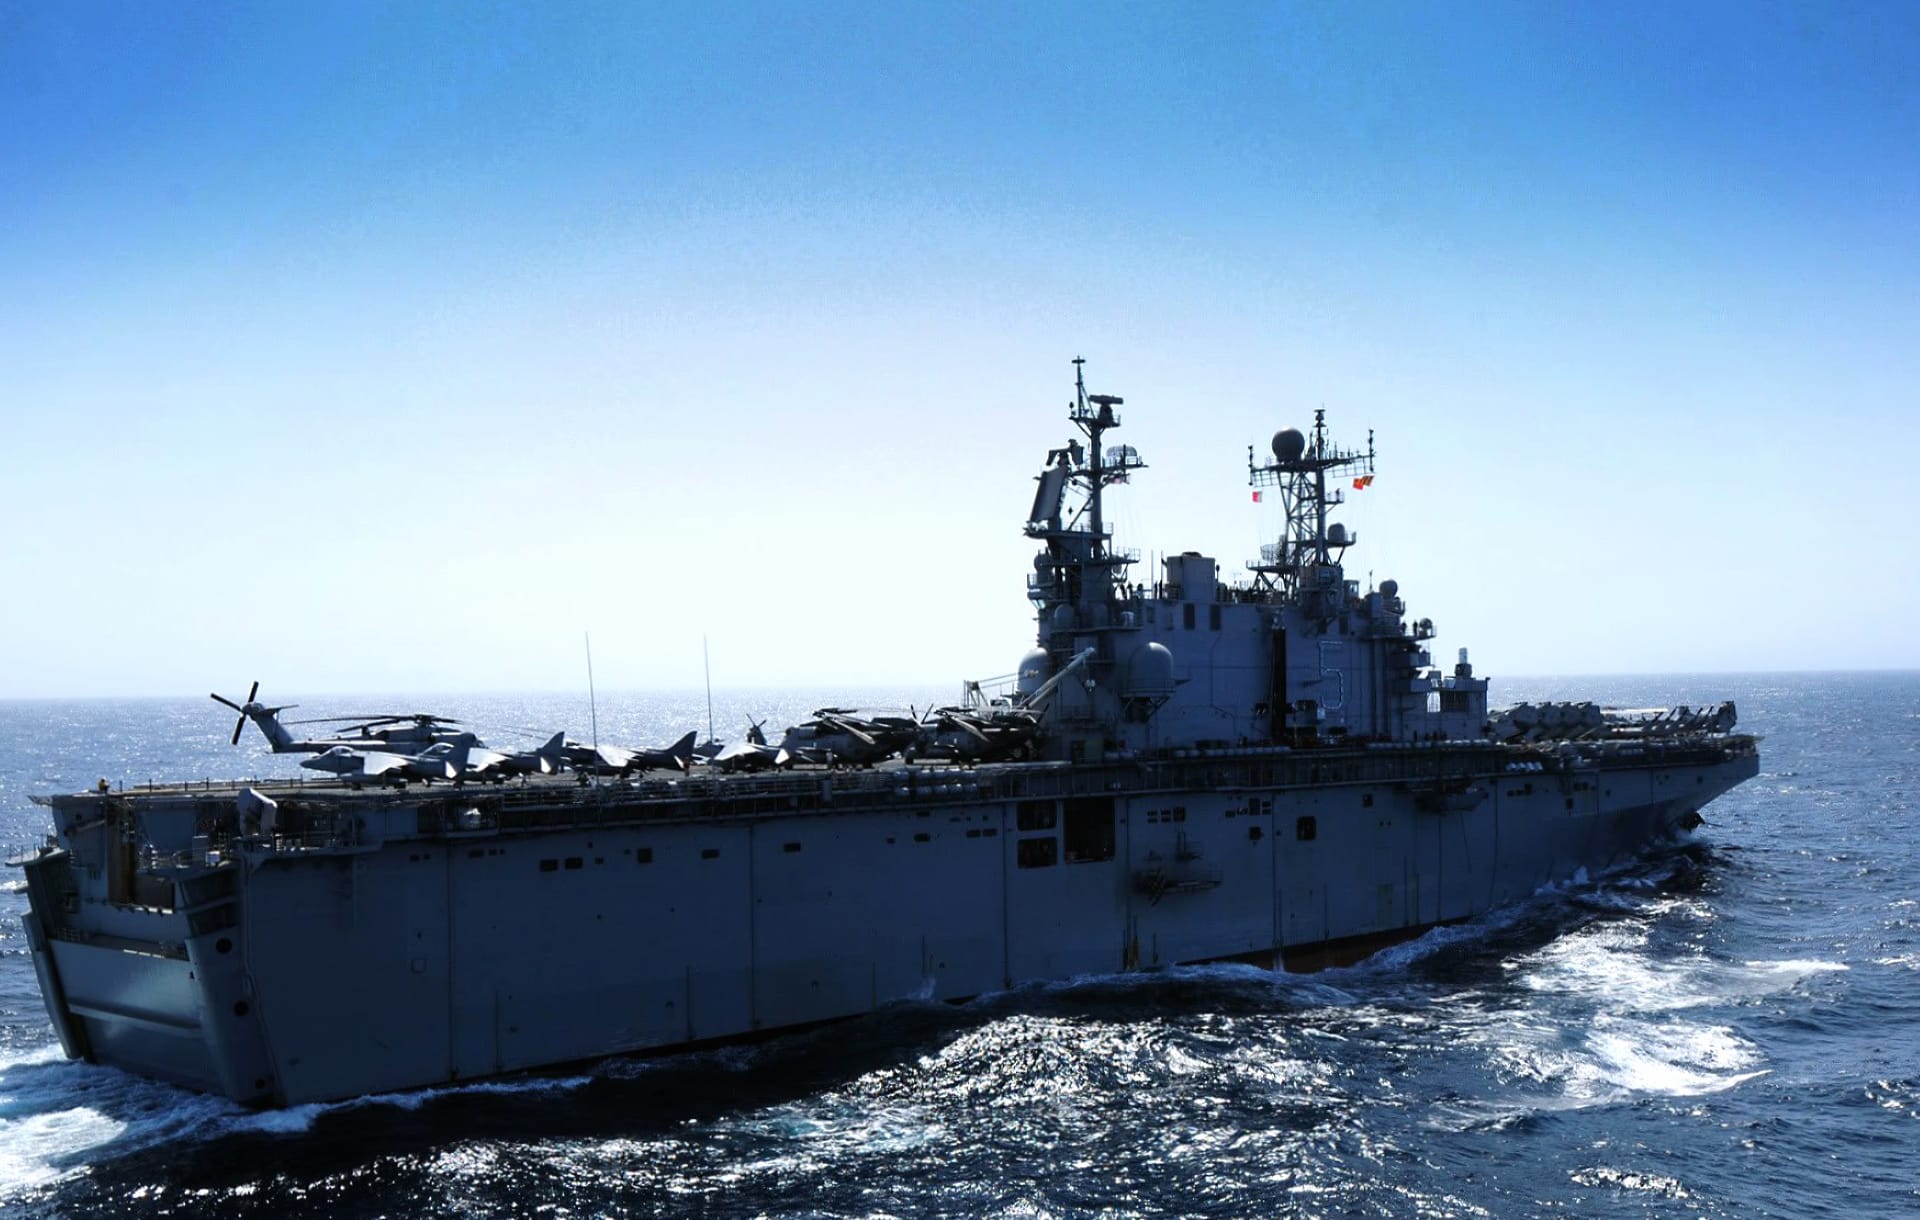 USS Peleliu (LHA-5) at 1600 x 1200 size wallpapers HD quality